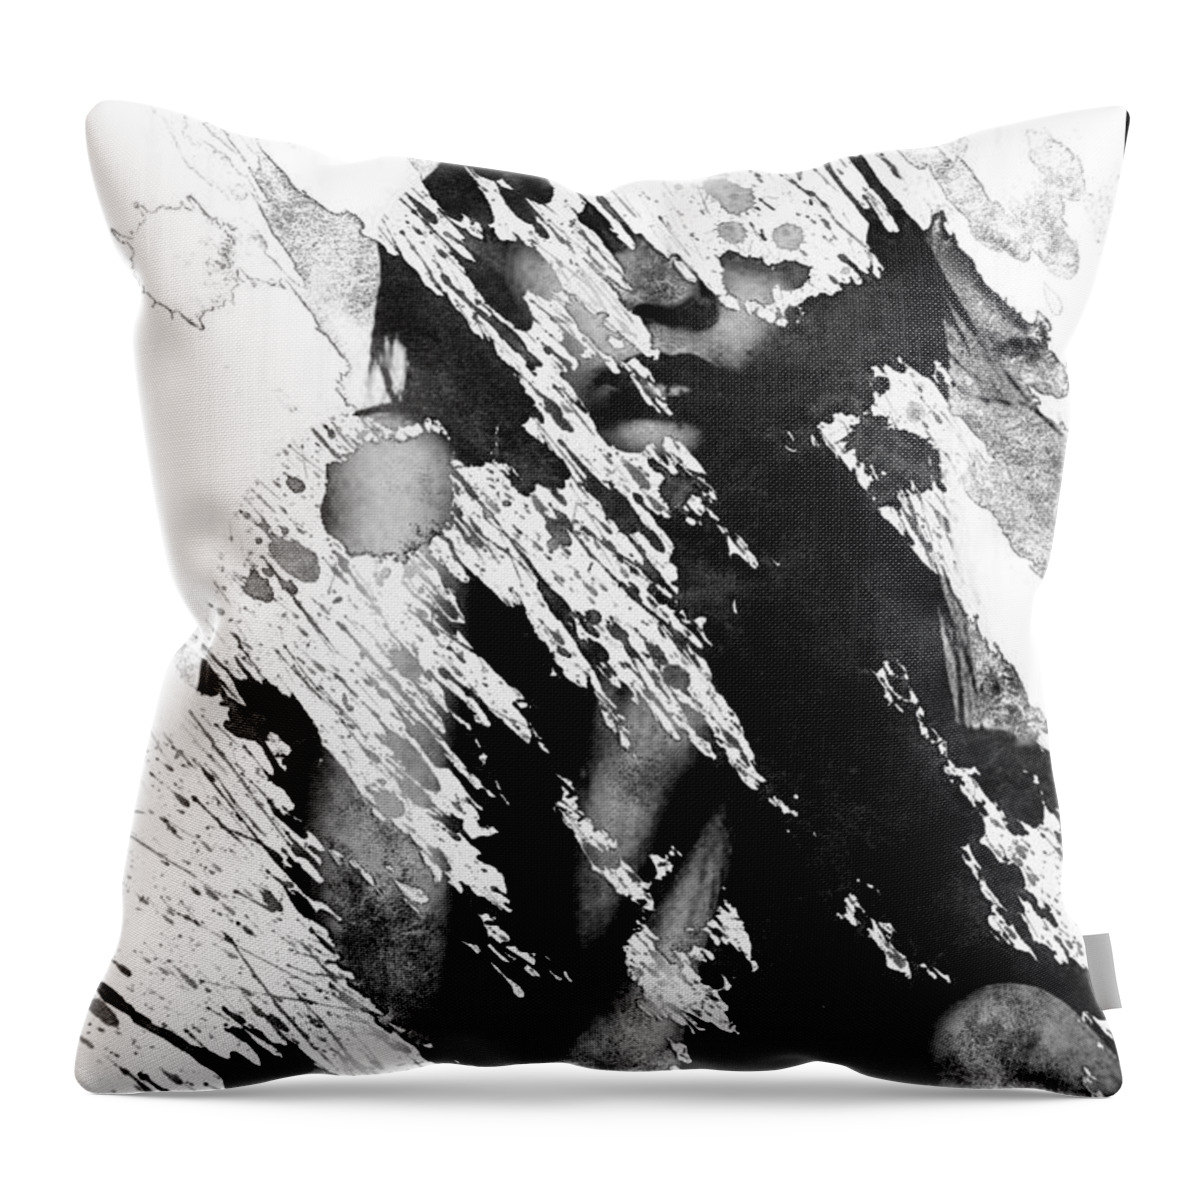 Jason Casteel Throw Pillow featuring the digital art Wash by Jason Casteel